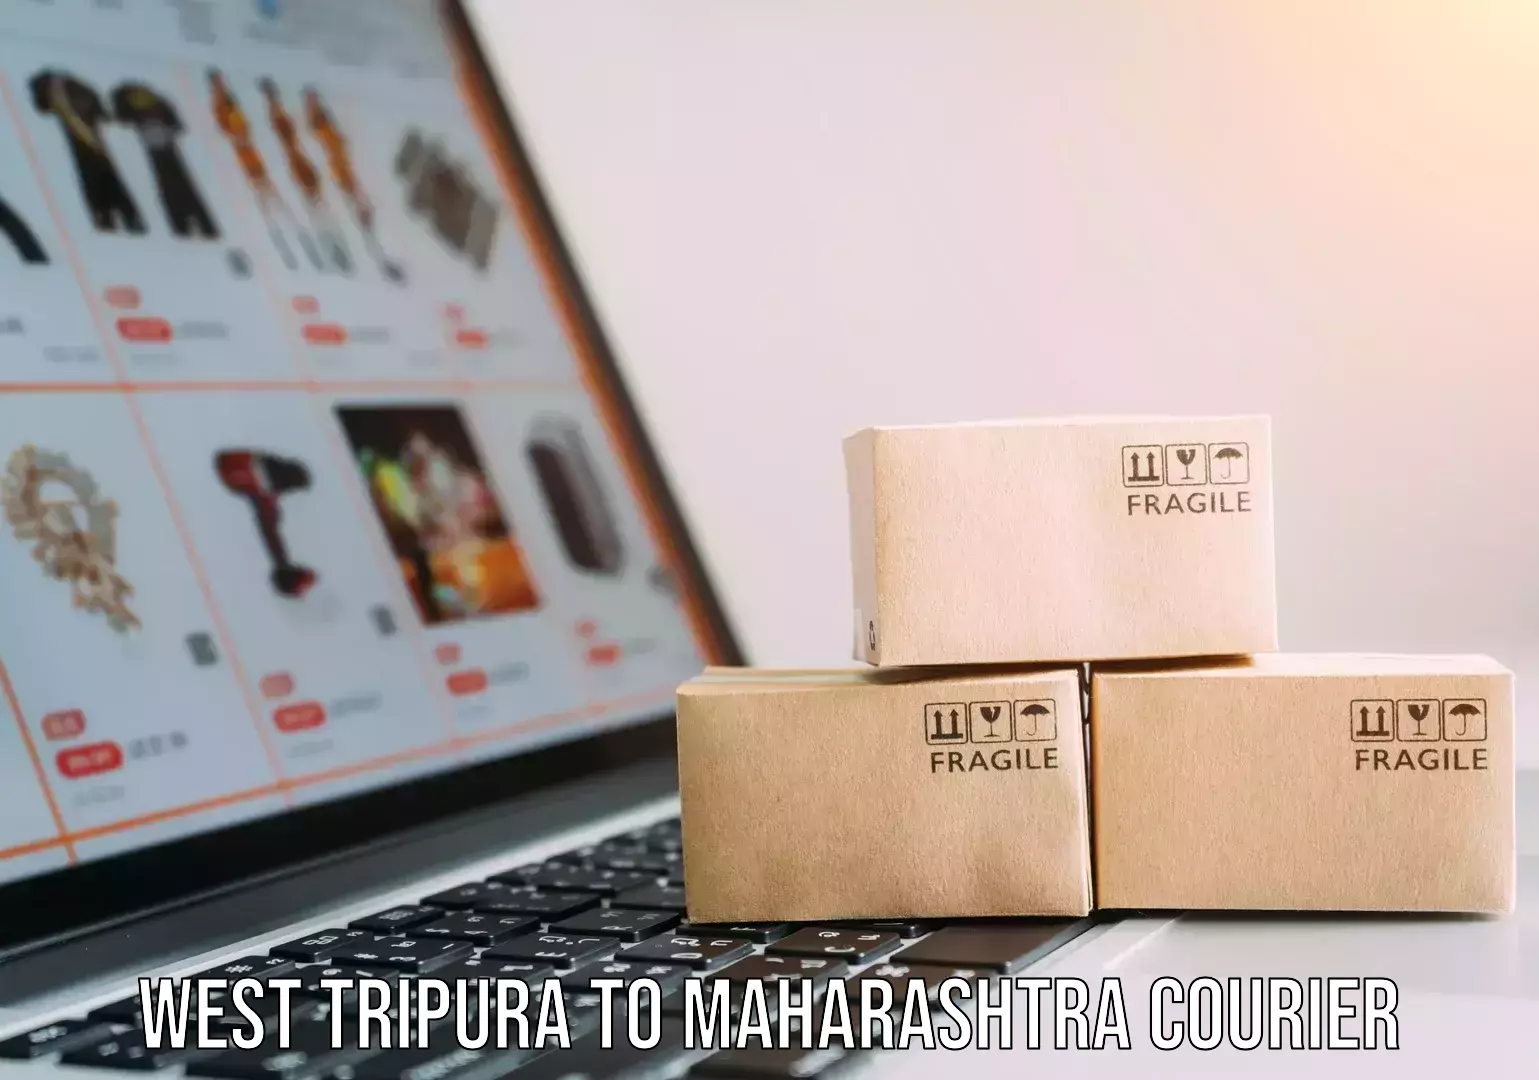 Easy return solutions in West Tripura to Maharashtra